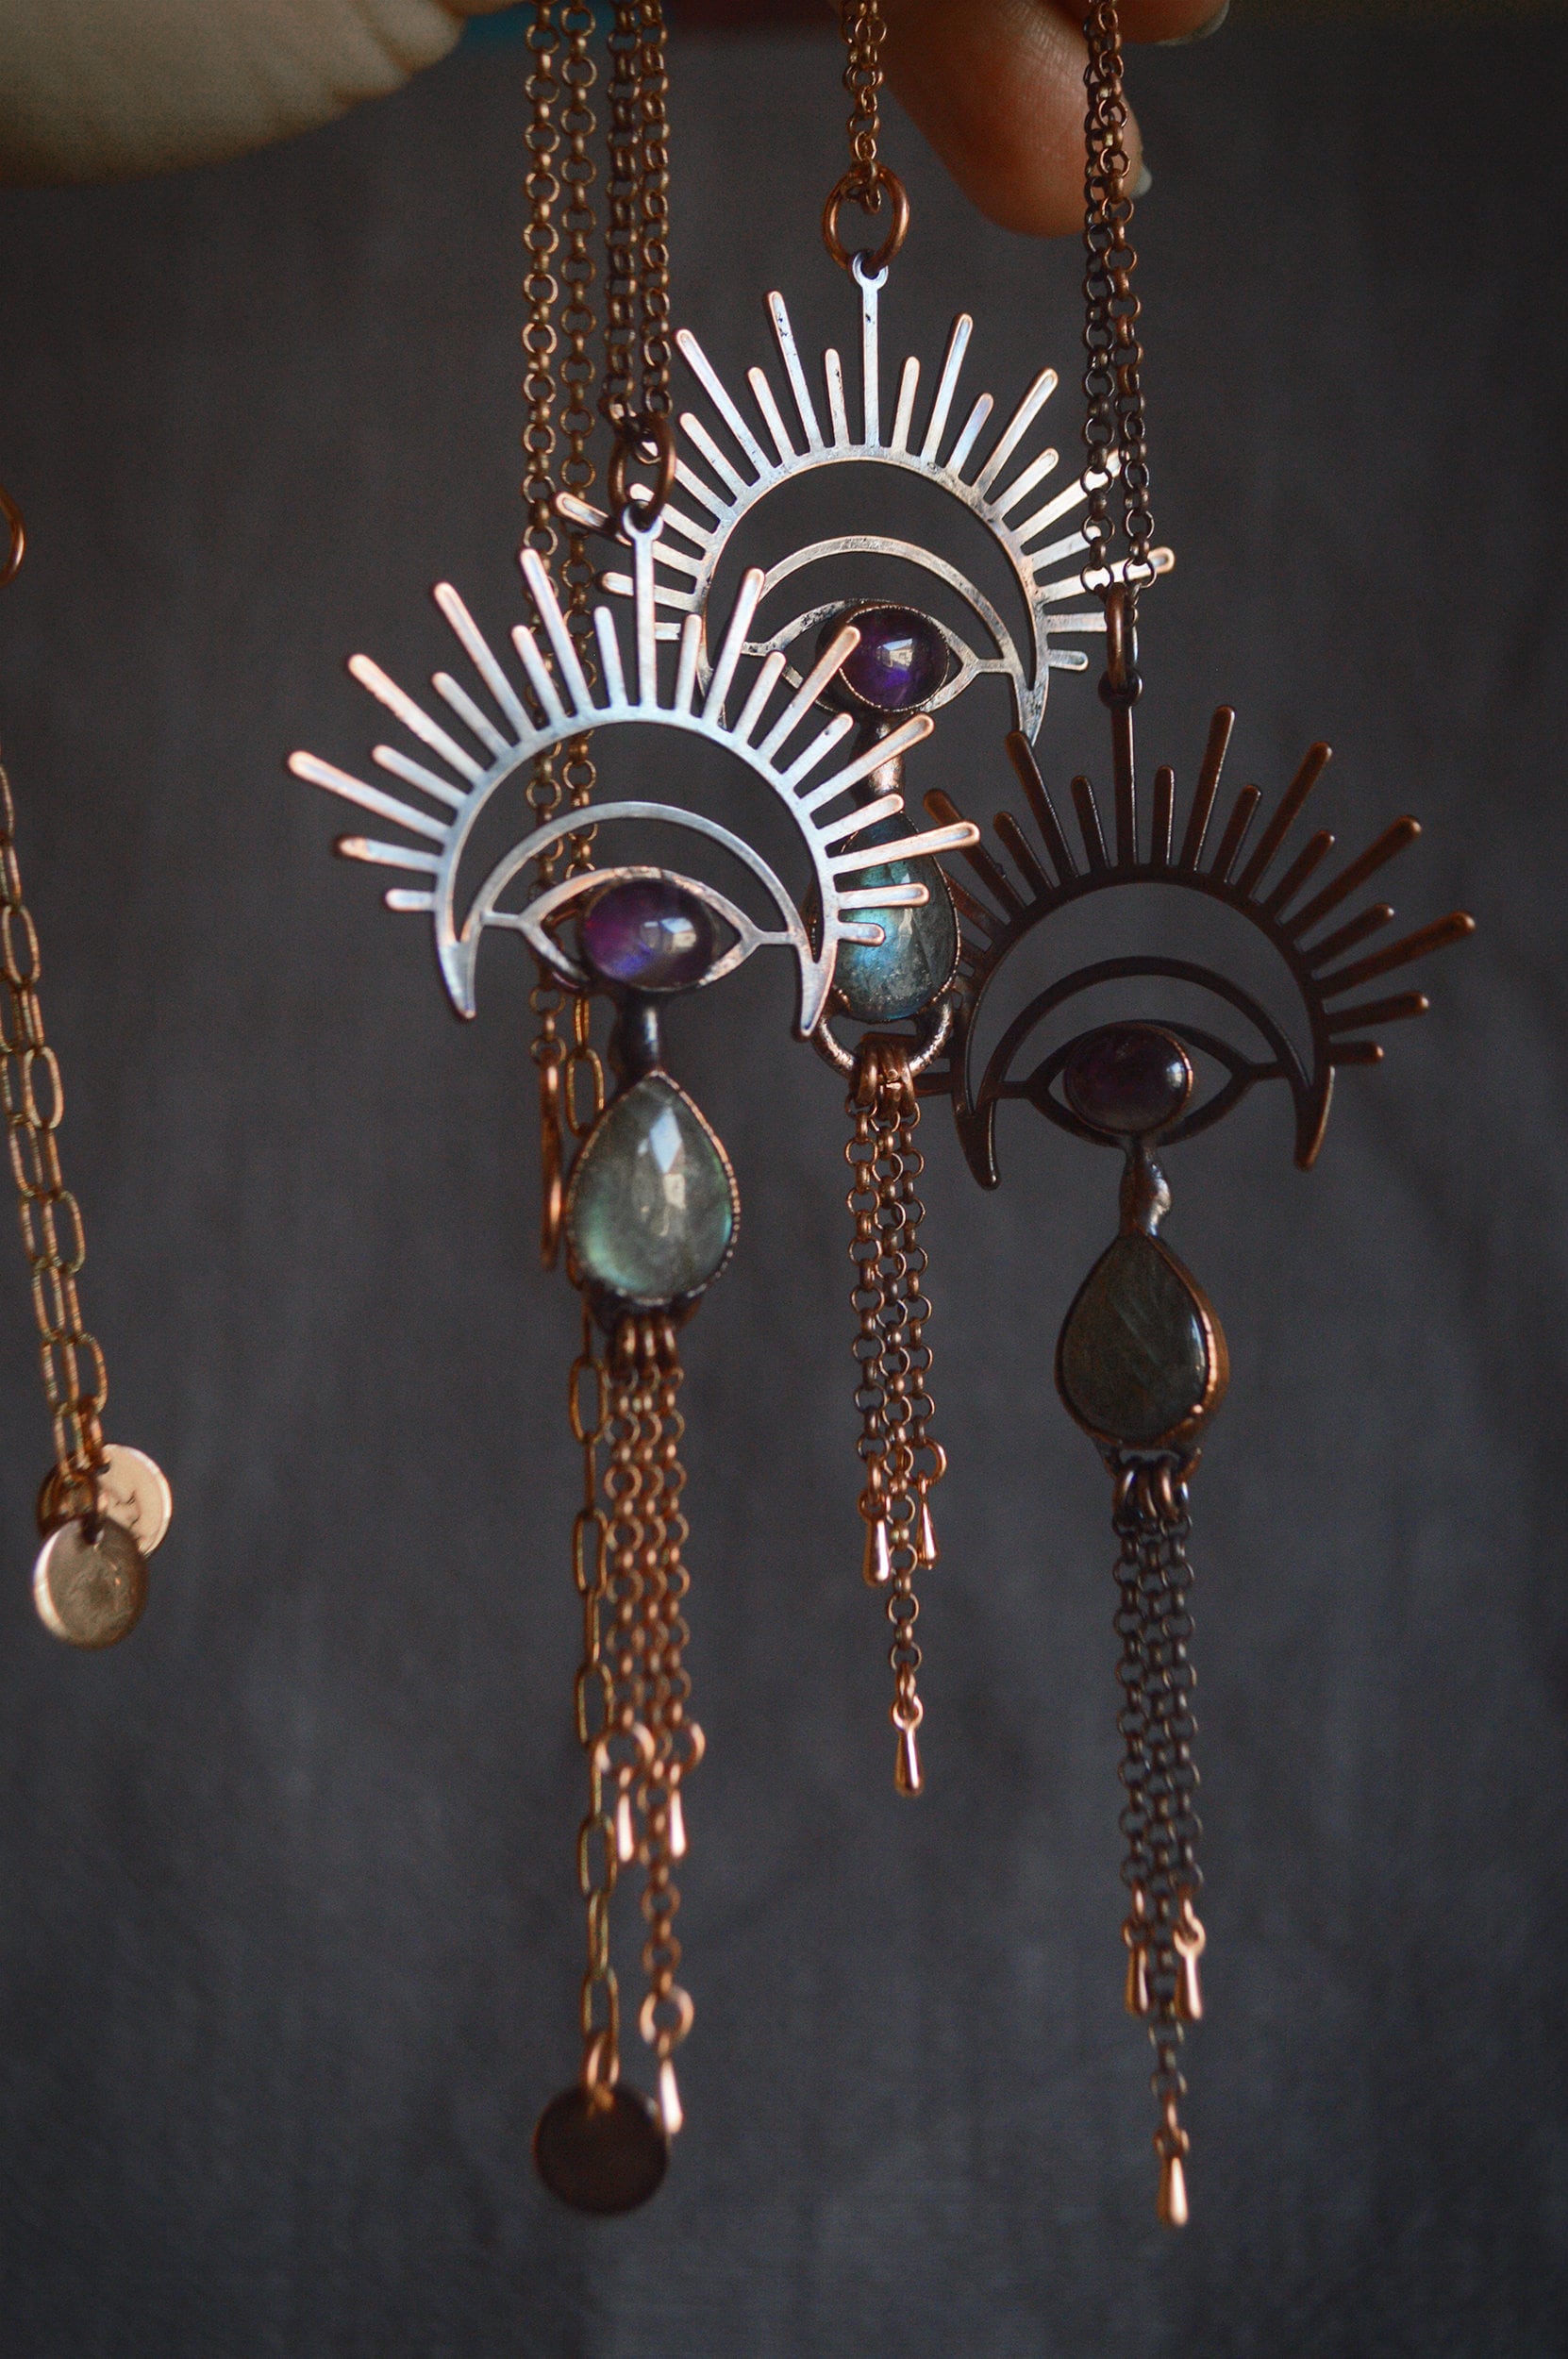 Copper eye pendant with labradorite and amethyst. Fringe tassel jewellery, boho style